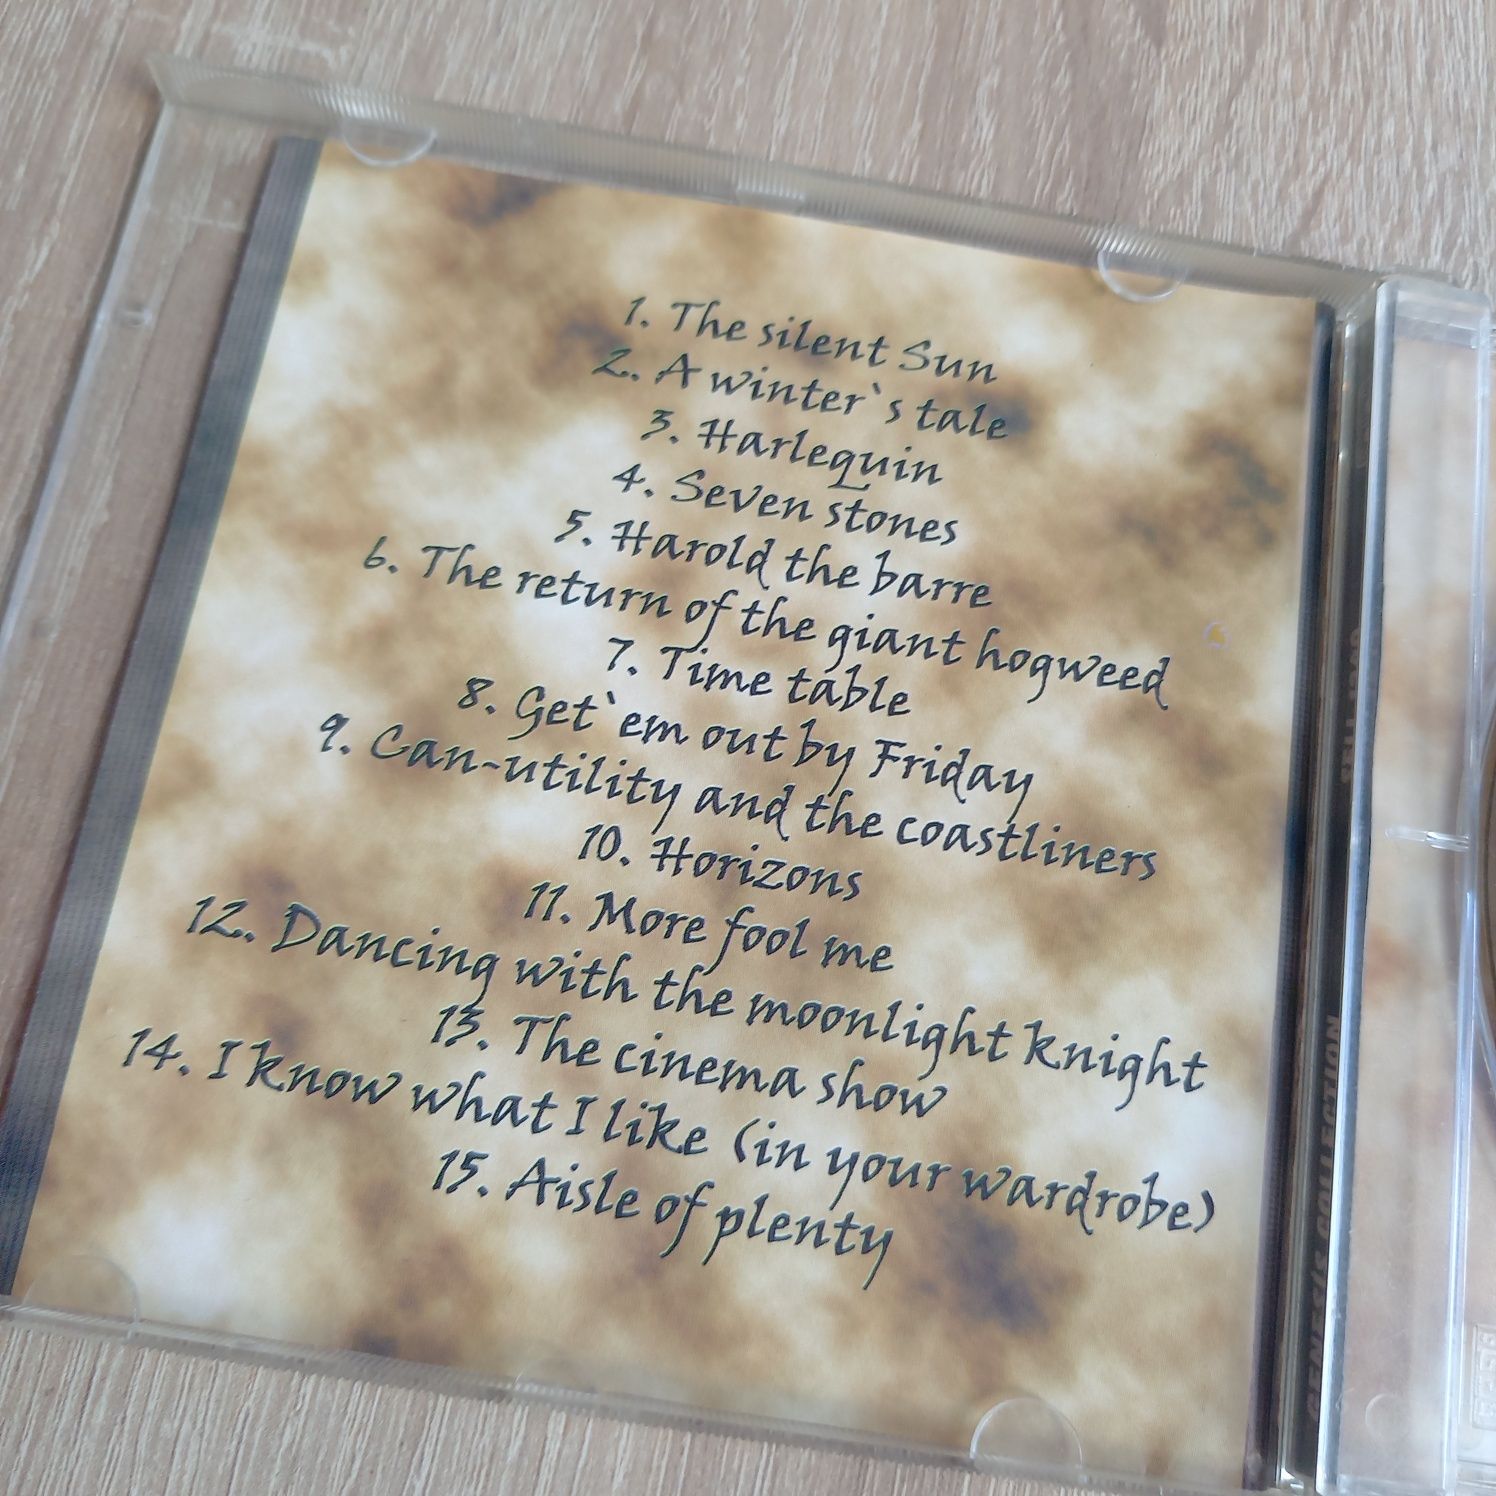 Płyta CD Genesis collection